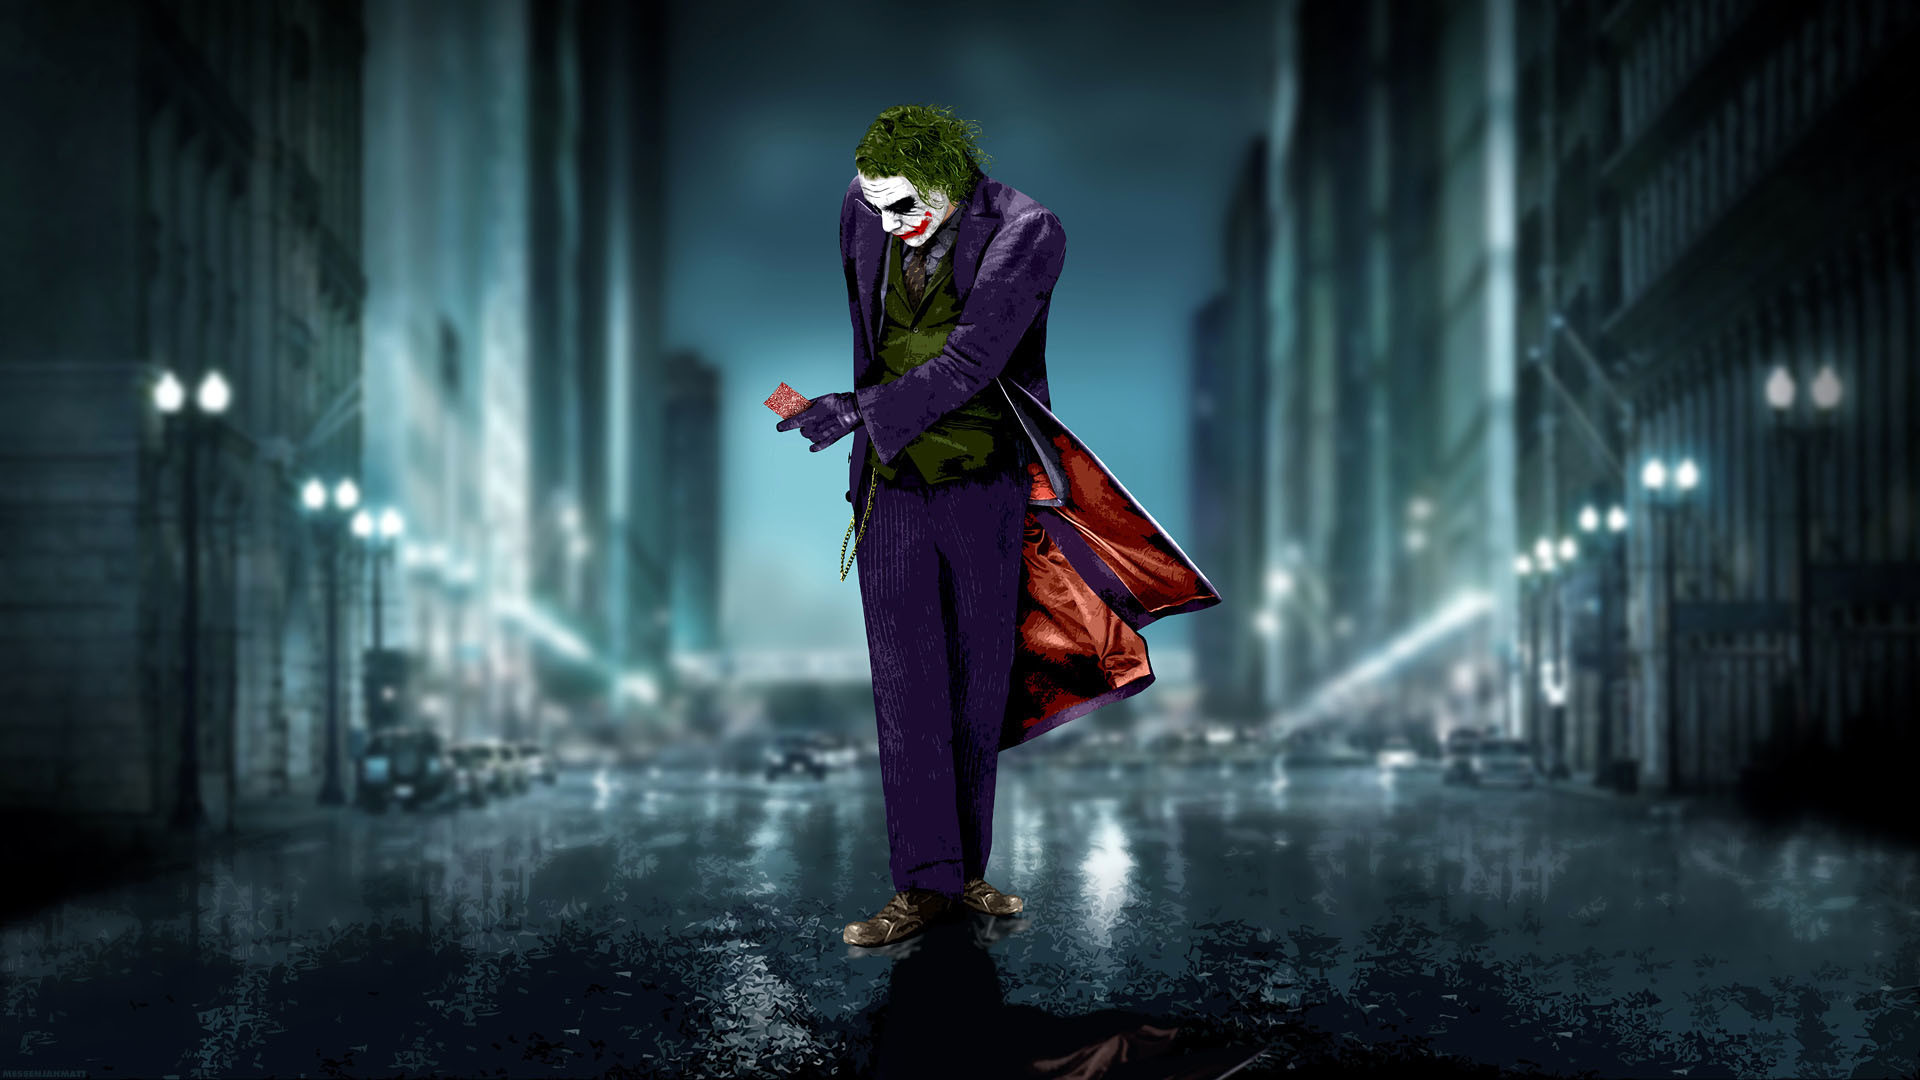 1920x1080 The Joker in Gotham - The Dark Knight  wallpaper